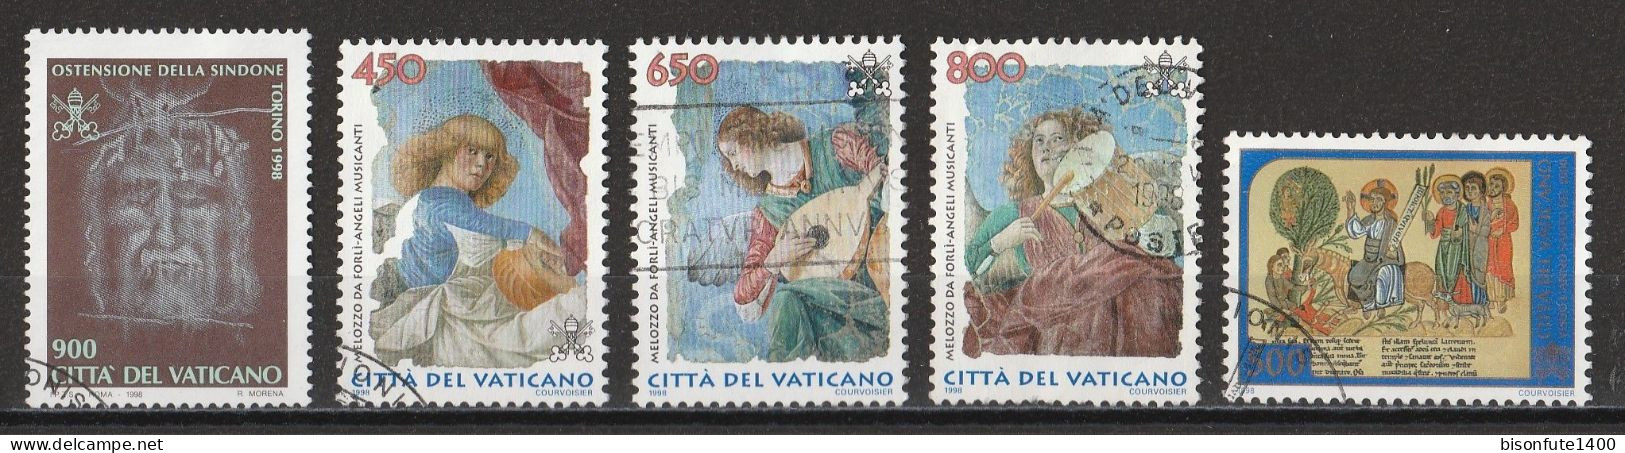 Vatican 1998 : Timbres Yvert & Tellier N° 1106 - 1108 - 1109 - 1110 - 1114 - 1115 - 1121 Et 1123 Oblitérés - Usati